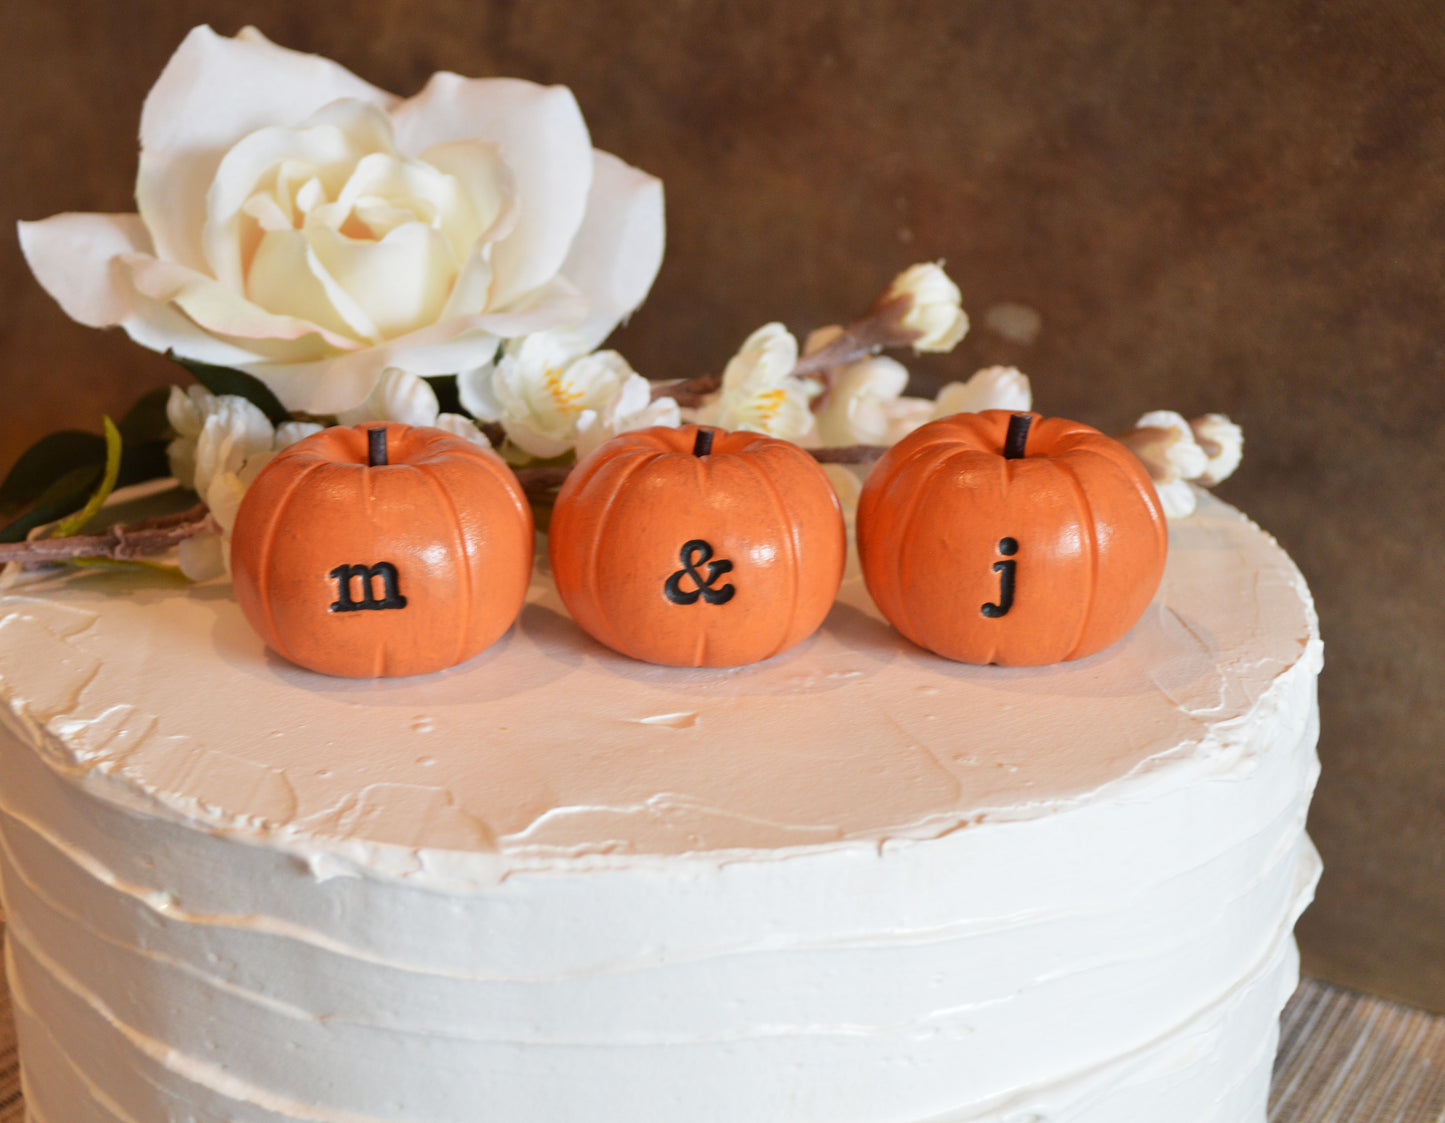 Custom personalized initials wedding cake topper orange pumpkins